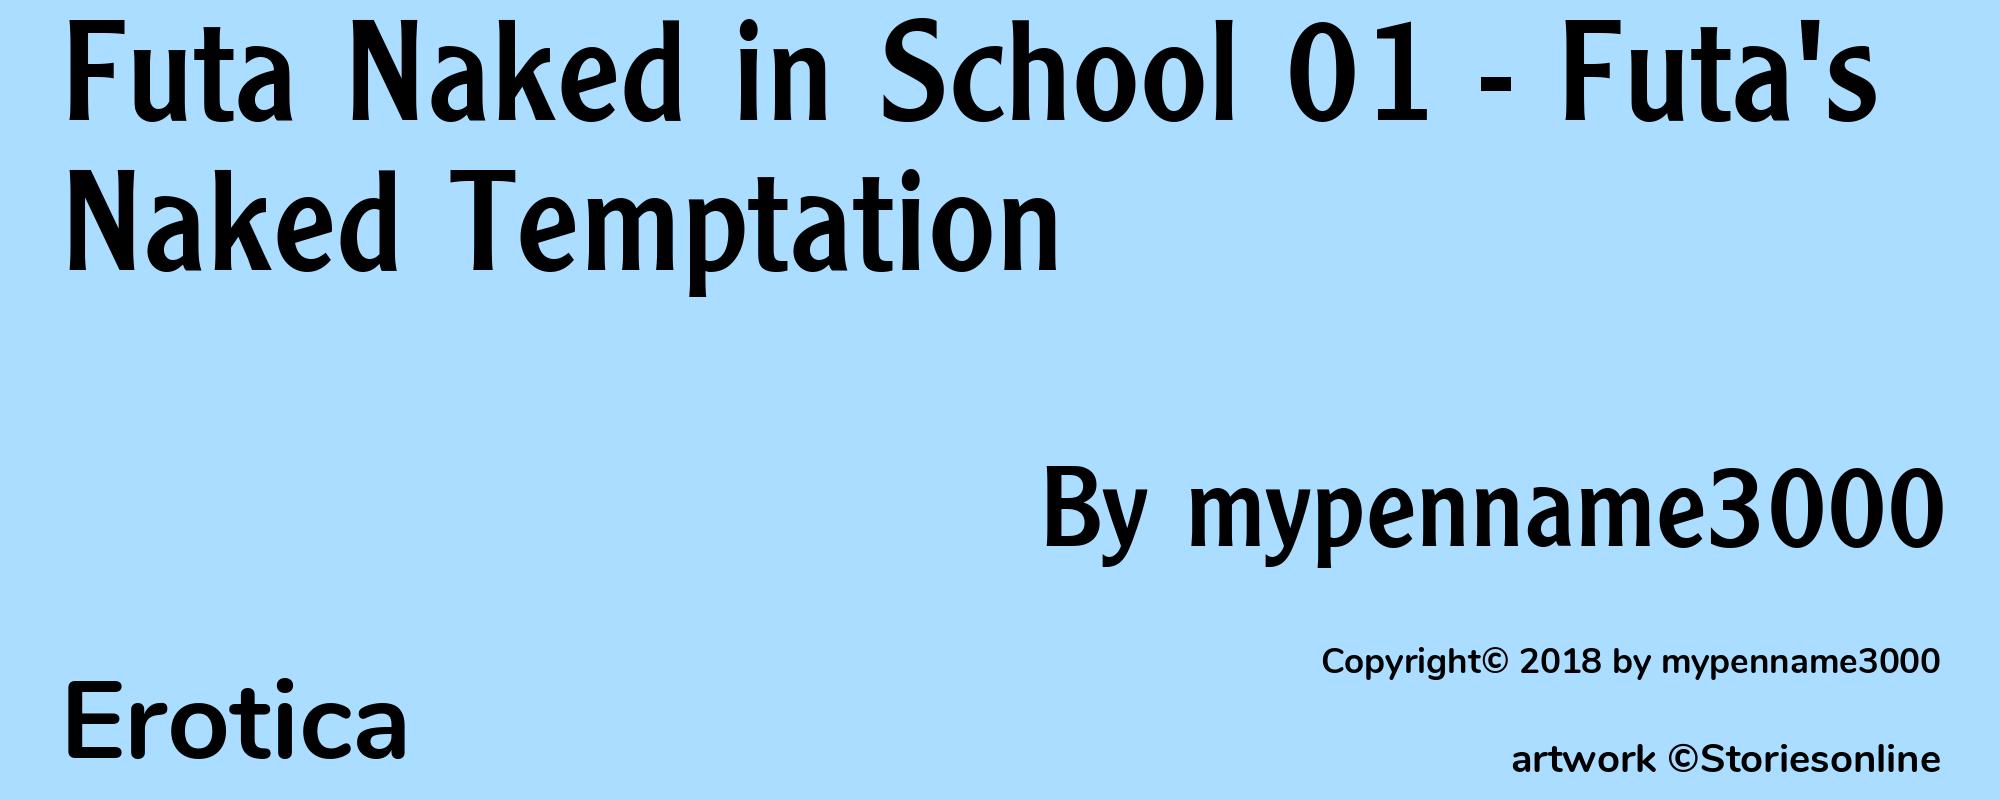 Futa Naked in School 01 - Futa's Naked Temptation - Cover